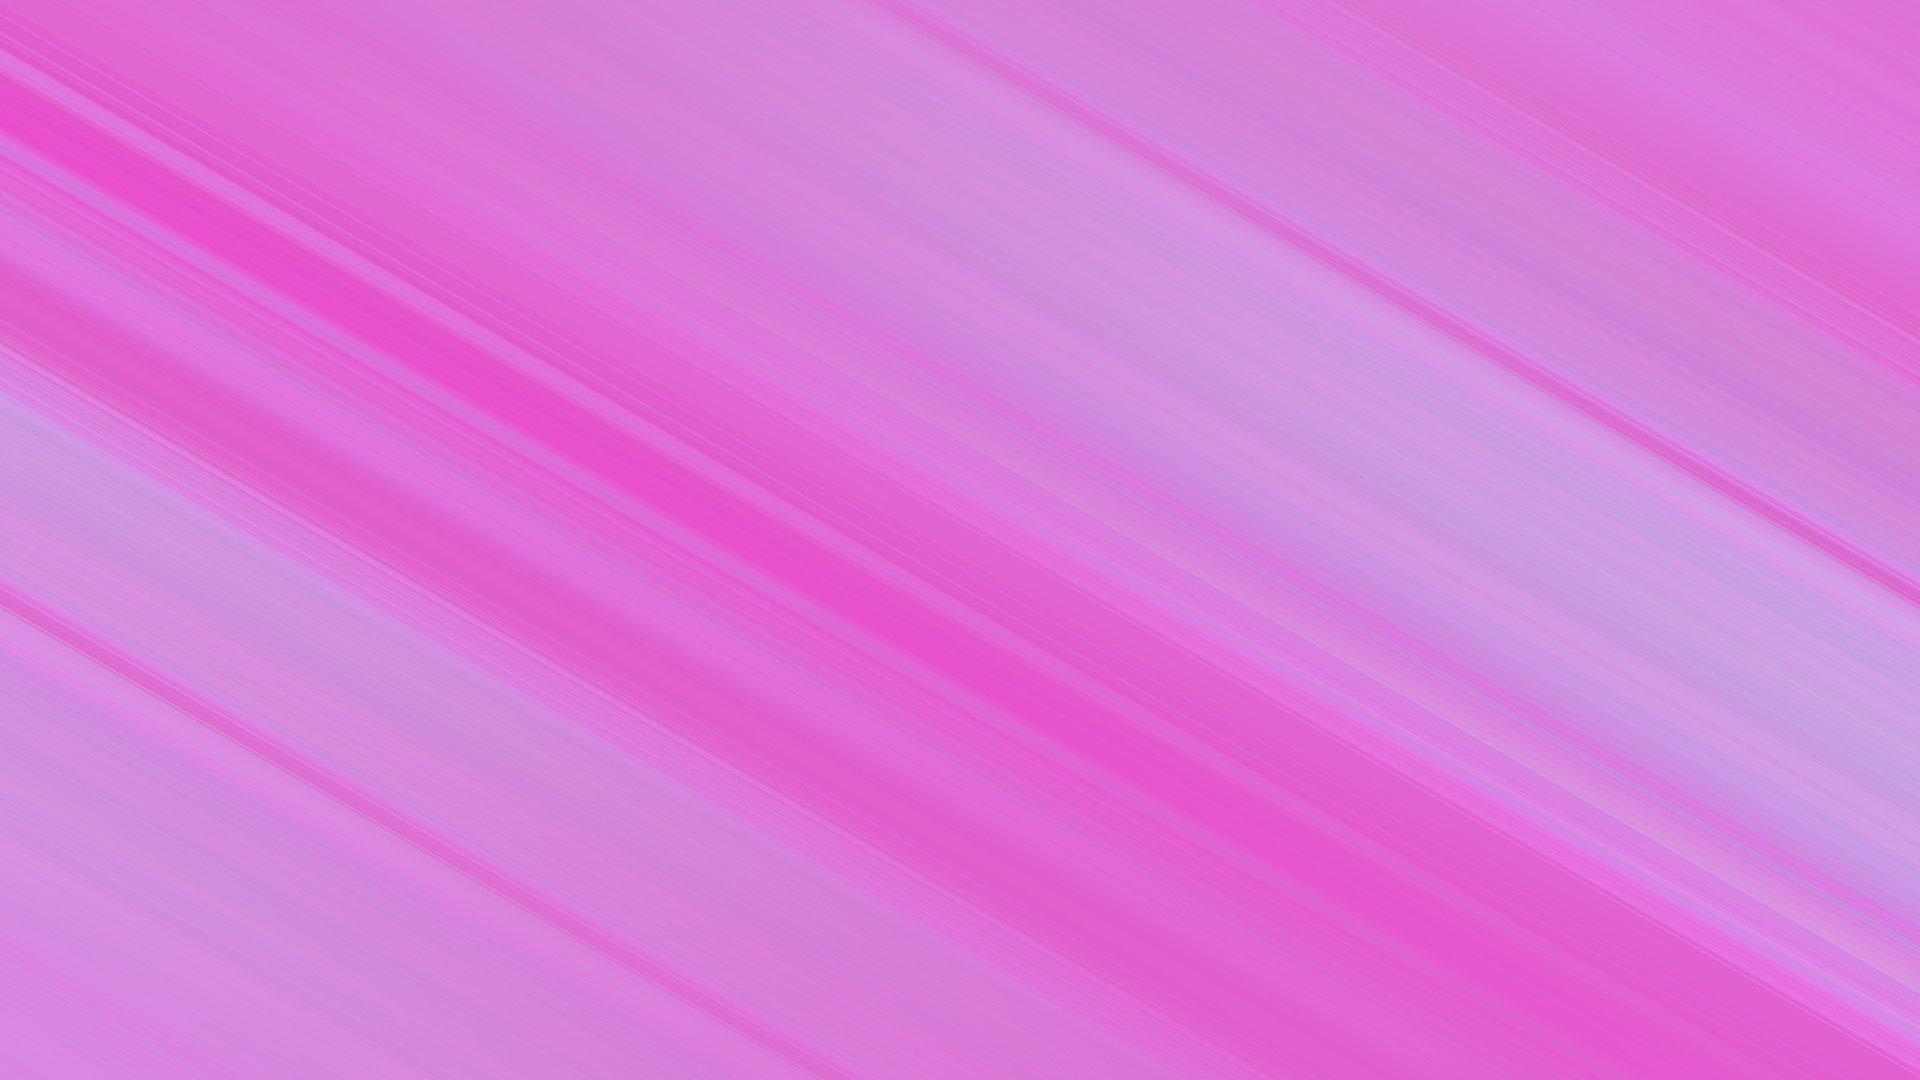 Pastel gradient background HD Wallpaper. Background Image